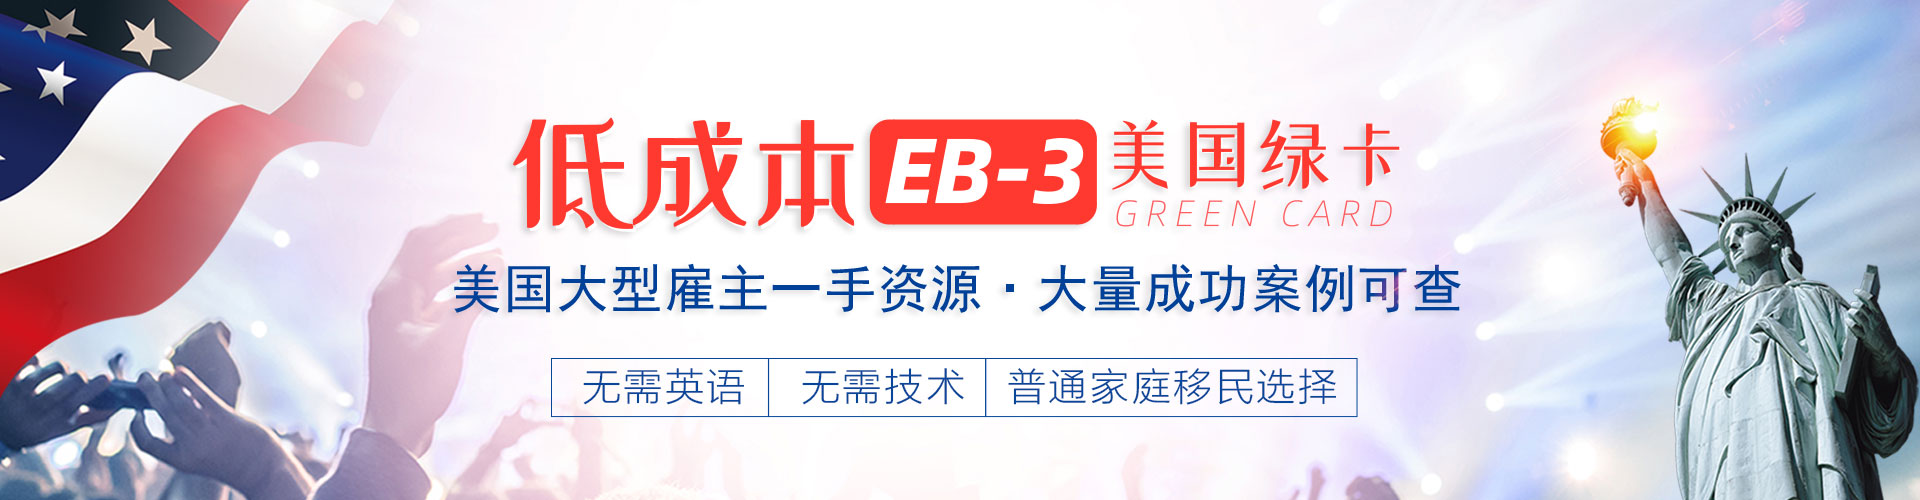 eb3技术移民EB3非技术移找民EB3顶级服务找麦克斯出国